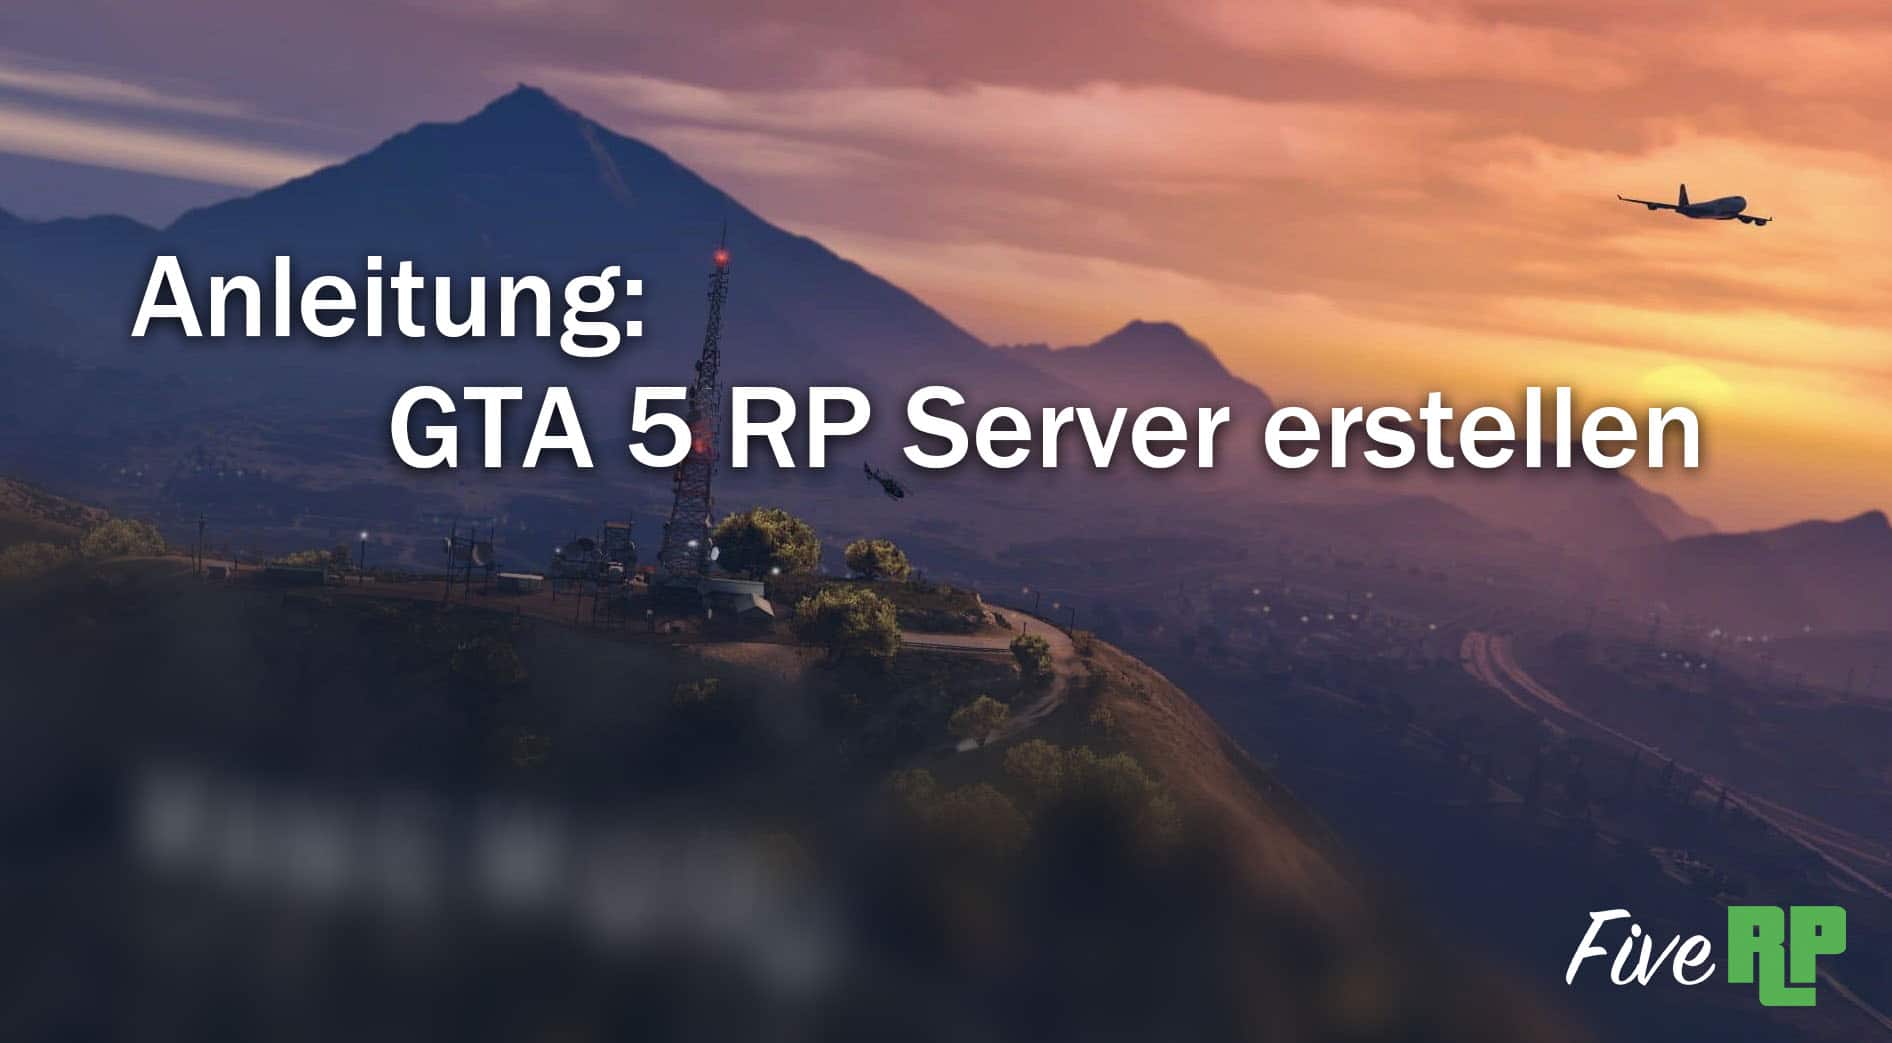 GTA 5 RP server wallpapers